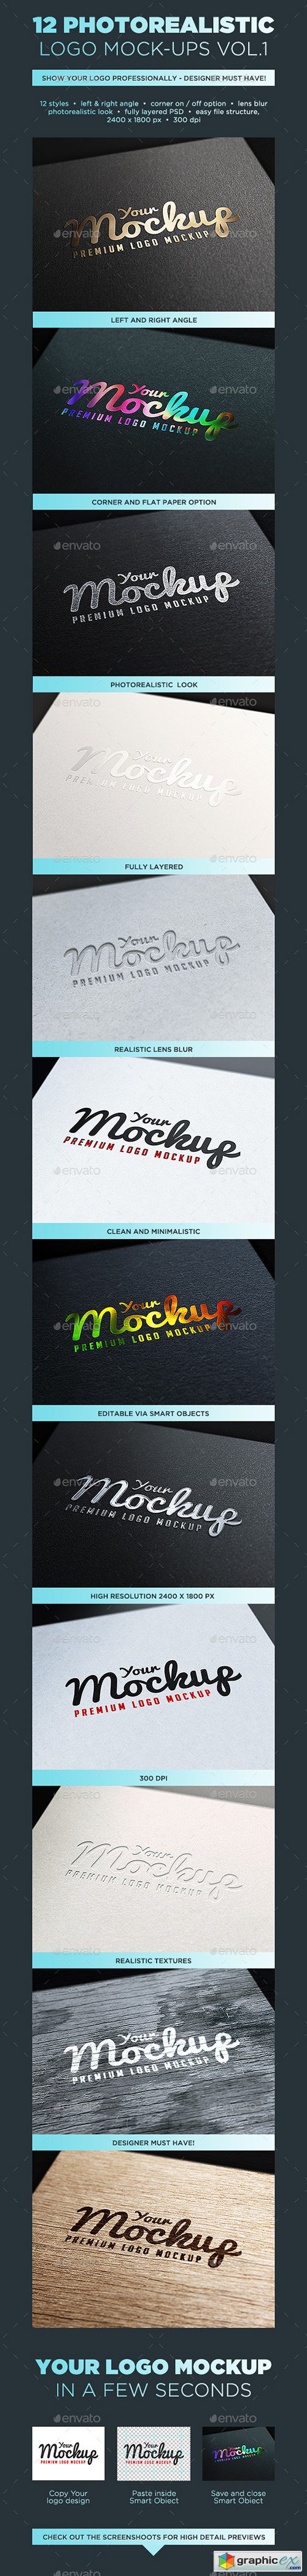 Your Mockup - Logo Mockups VOL.1